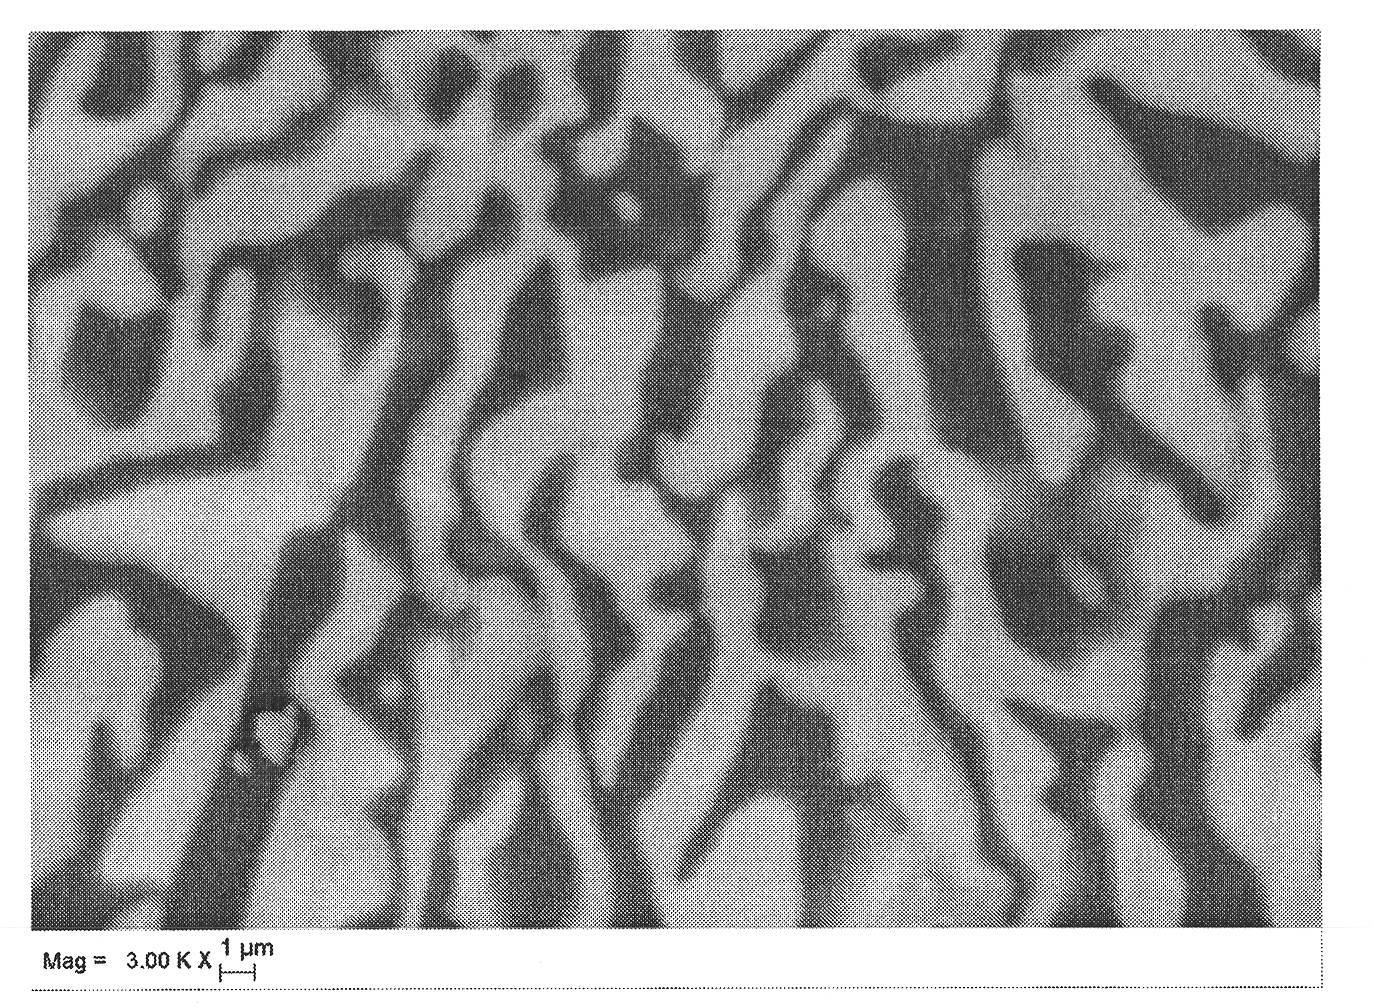 Method for obtaining texture topography of alumina-based binary eutectic melt growth ceramic